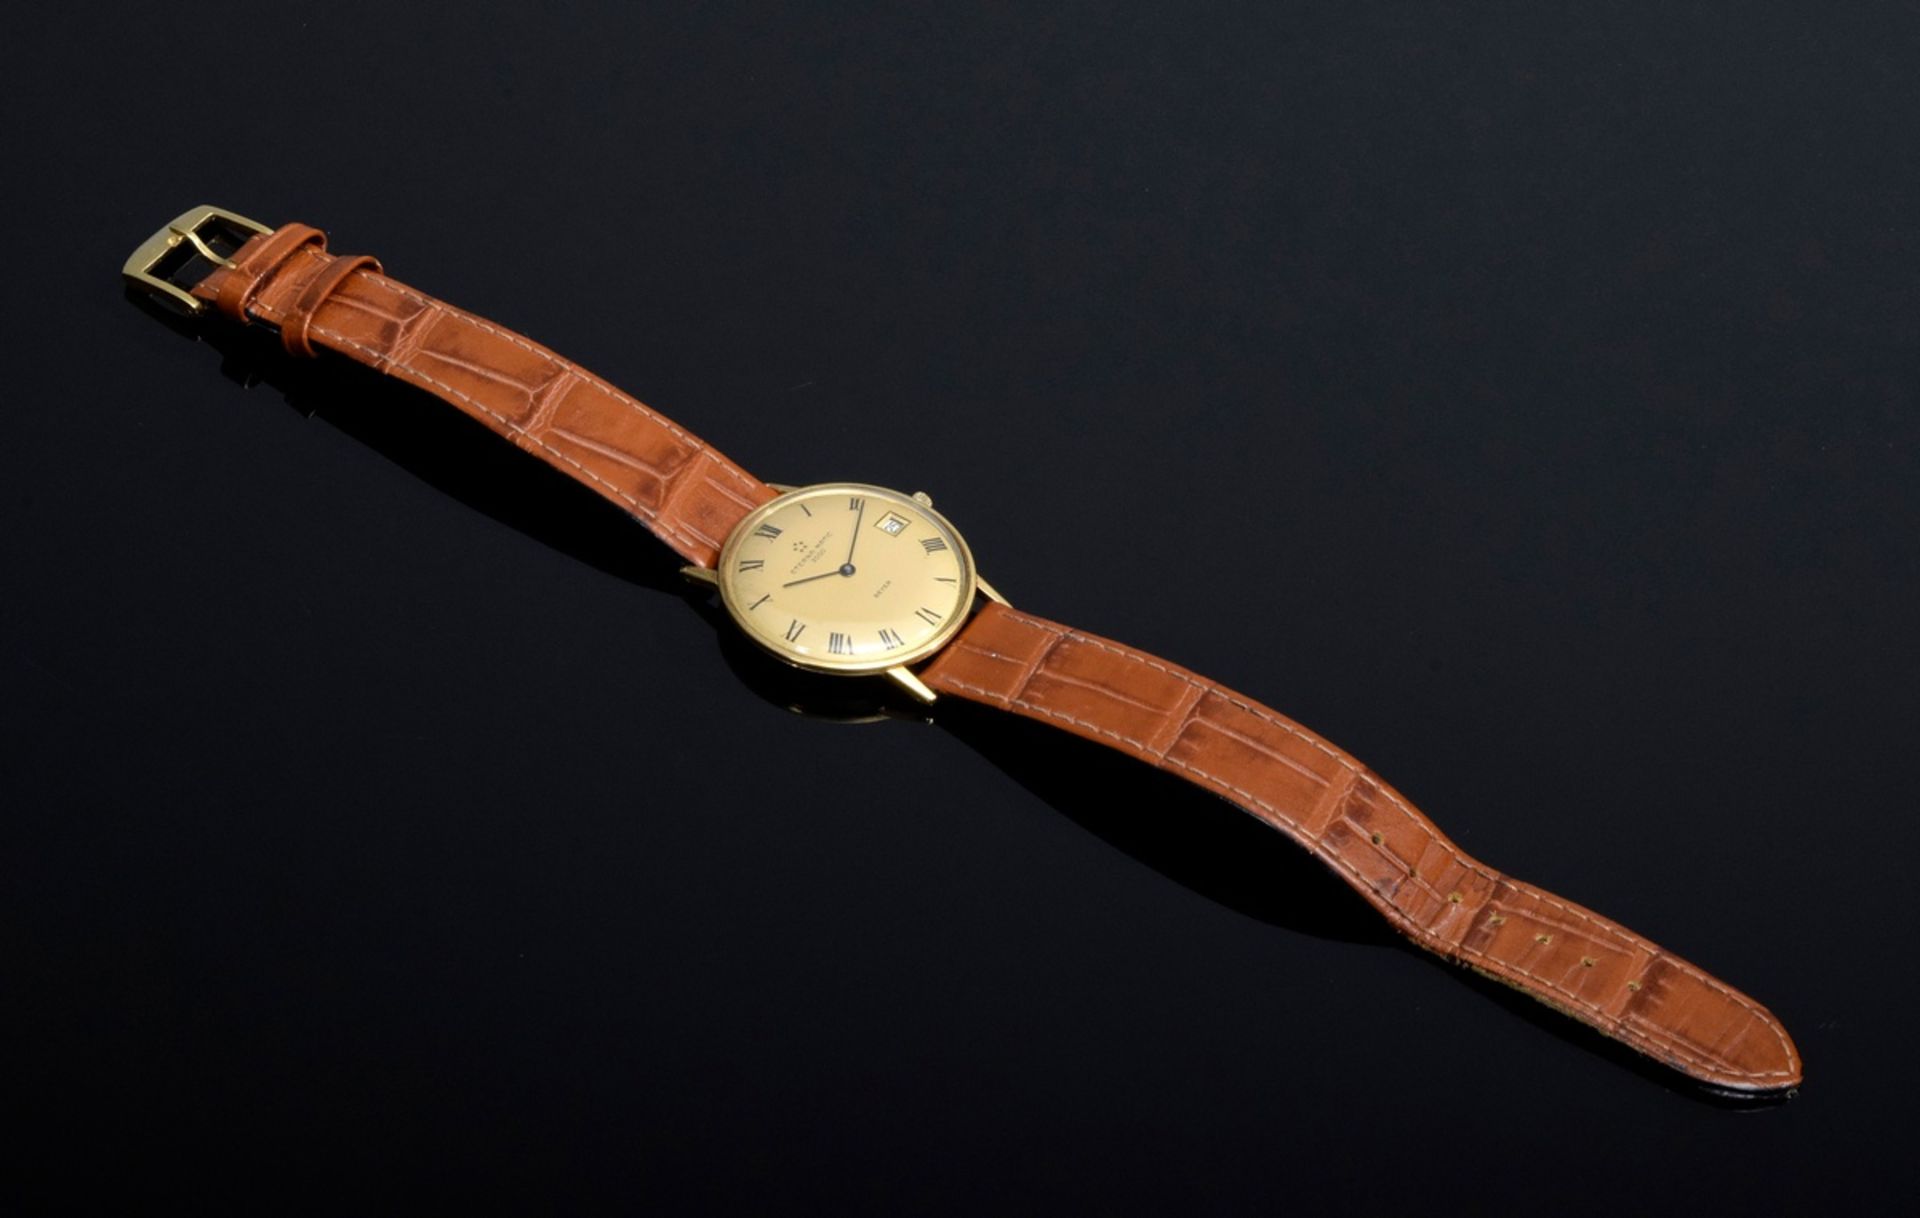 GG 750 Eterna Matic "3000 Beyer" Armbanduhr mit | GG 750 Eterna Matic "3000 Beyer" wristwatch with - Image 5 of 5